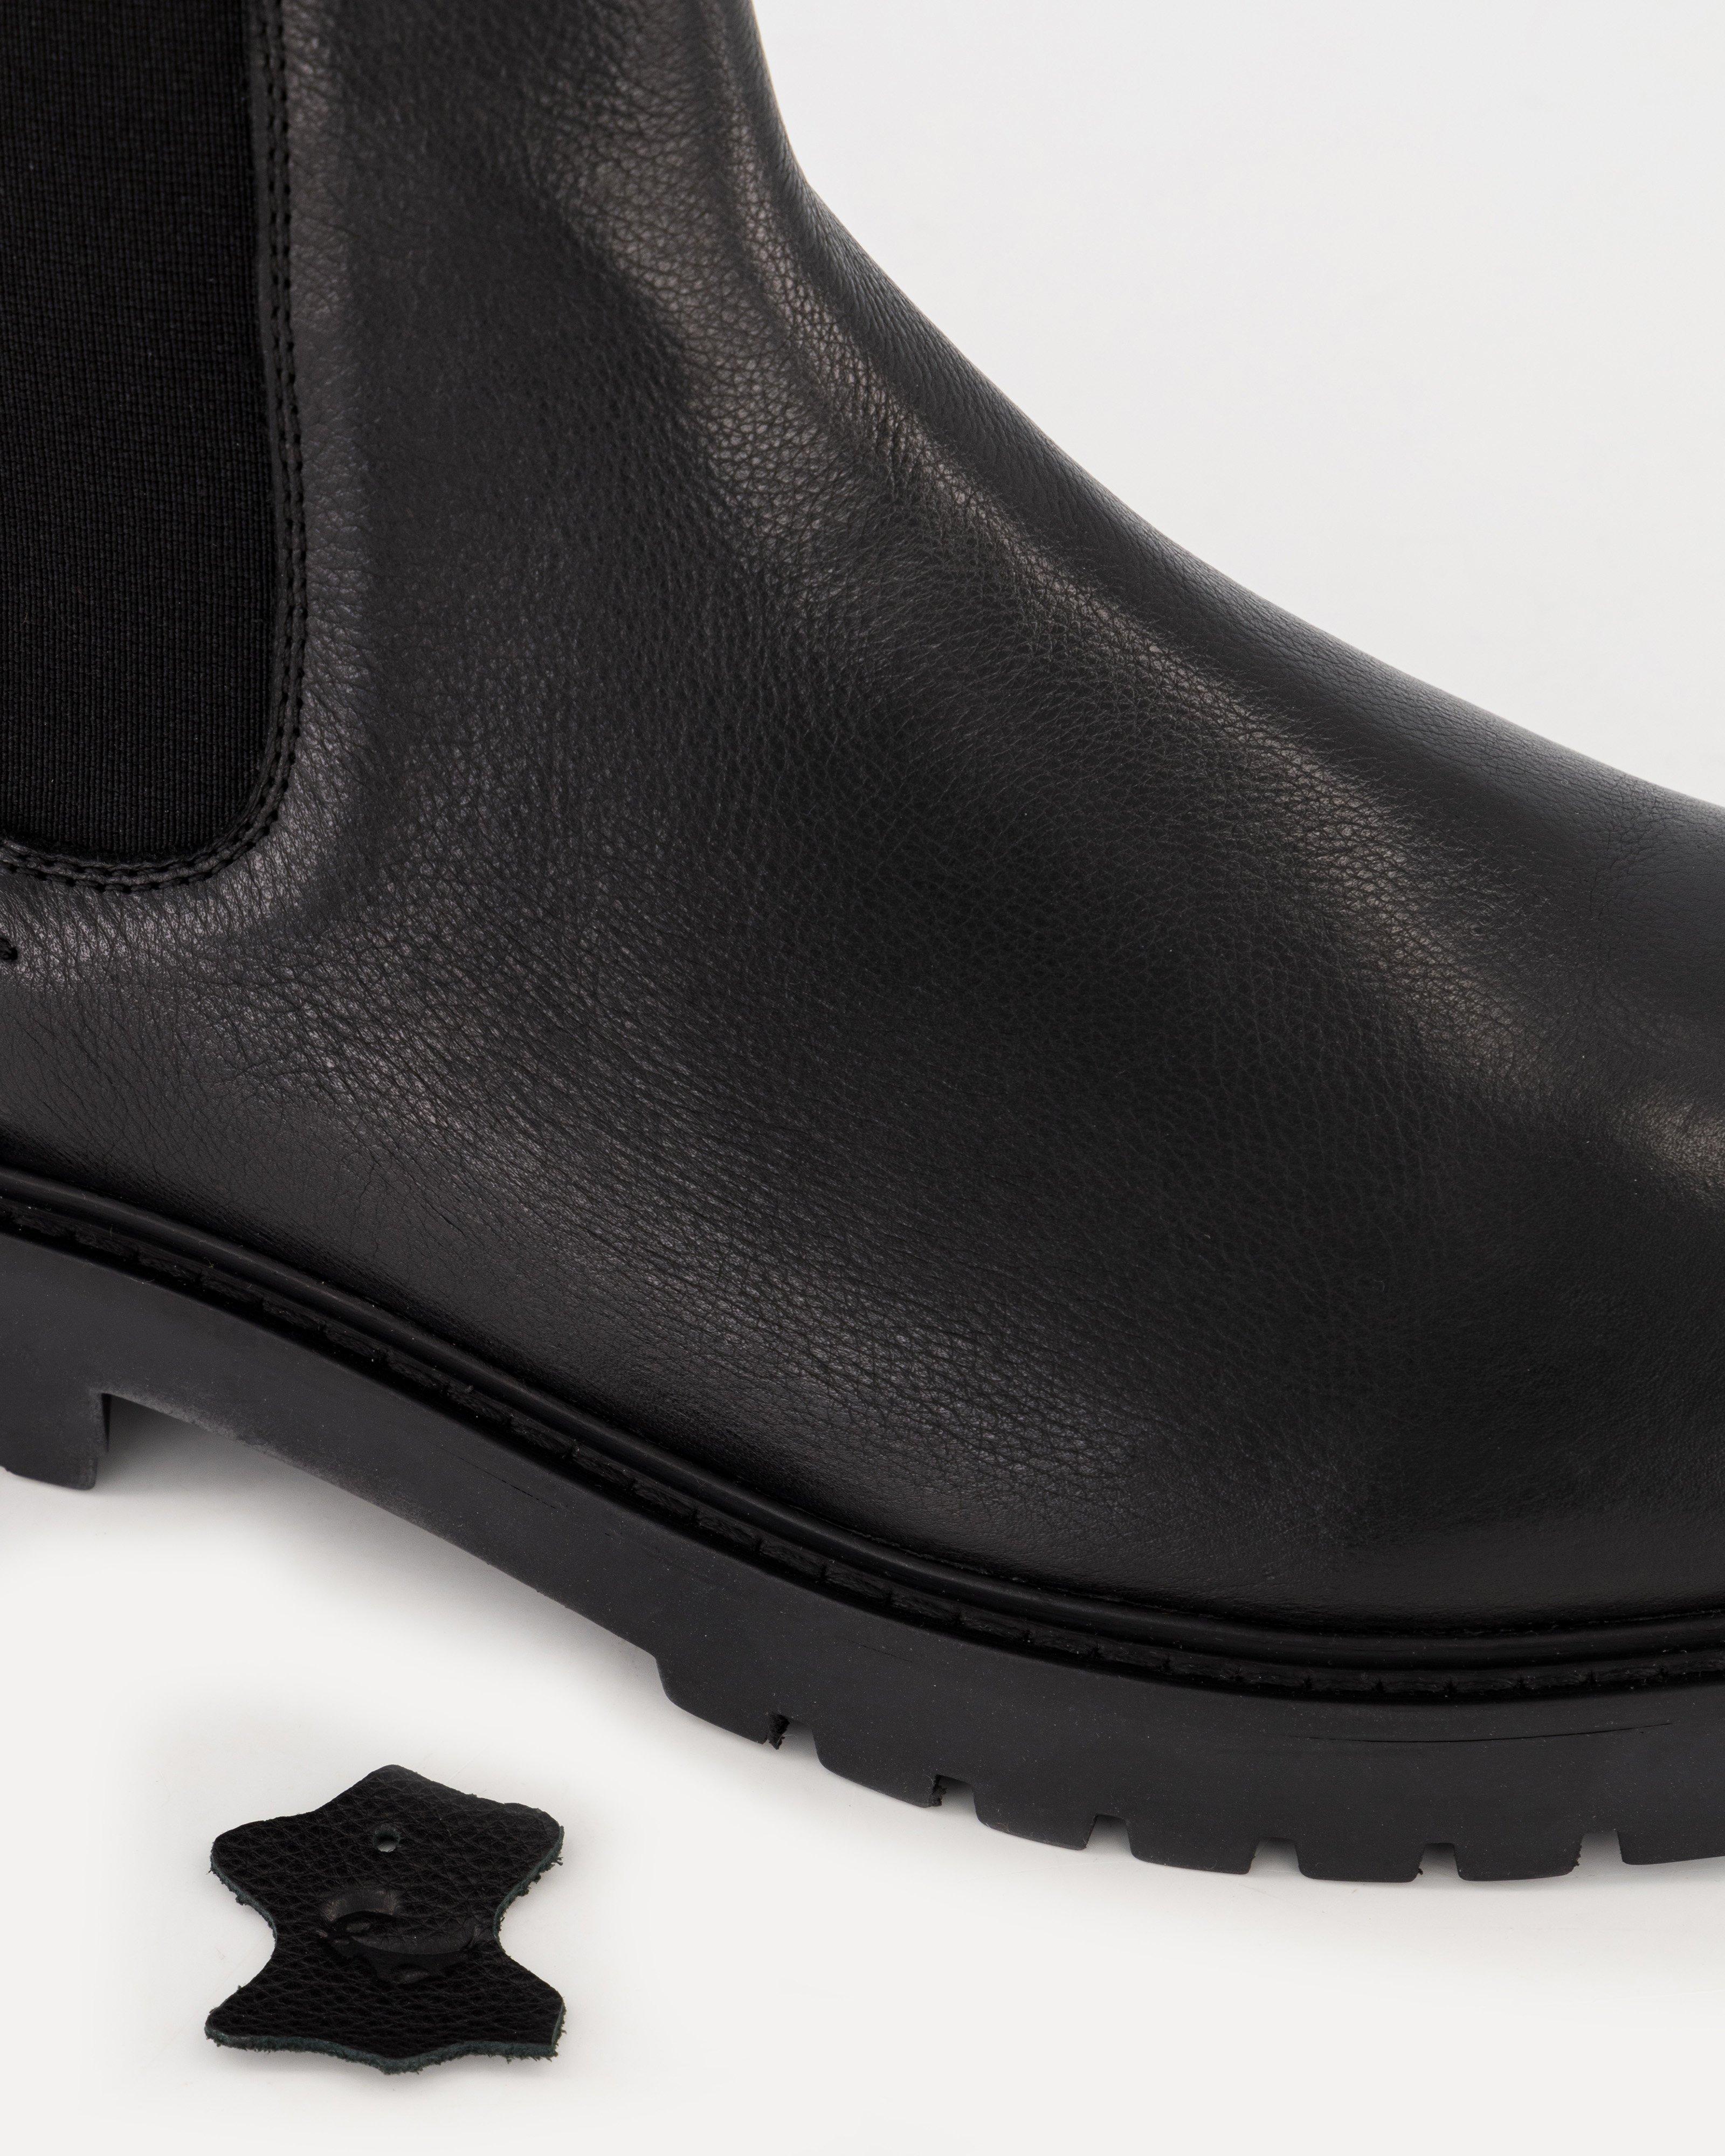 Men’s Harlon Chelsea Leather Boot | Old Khaki